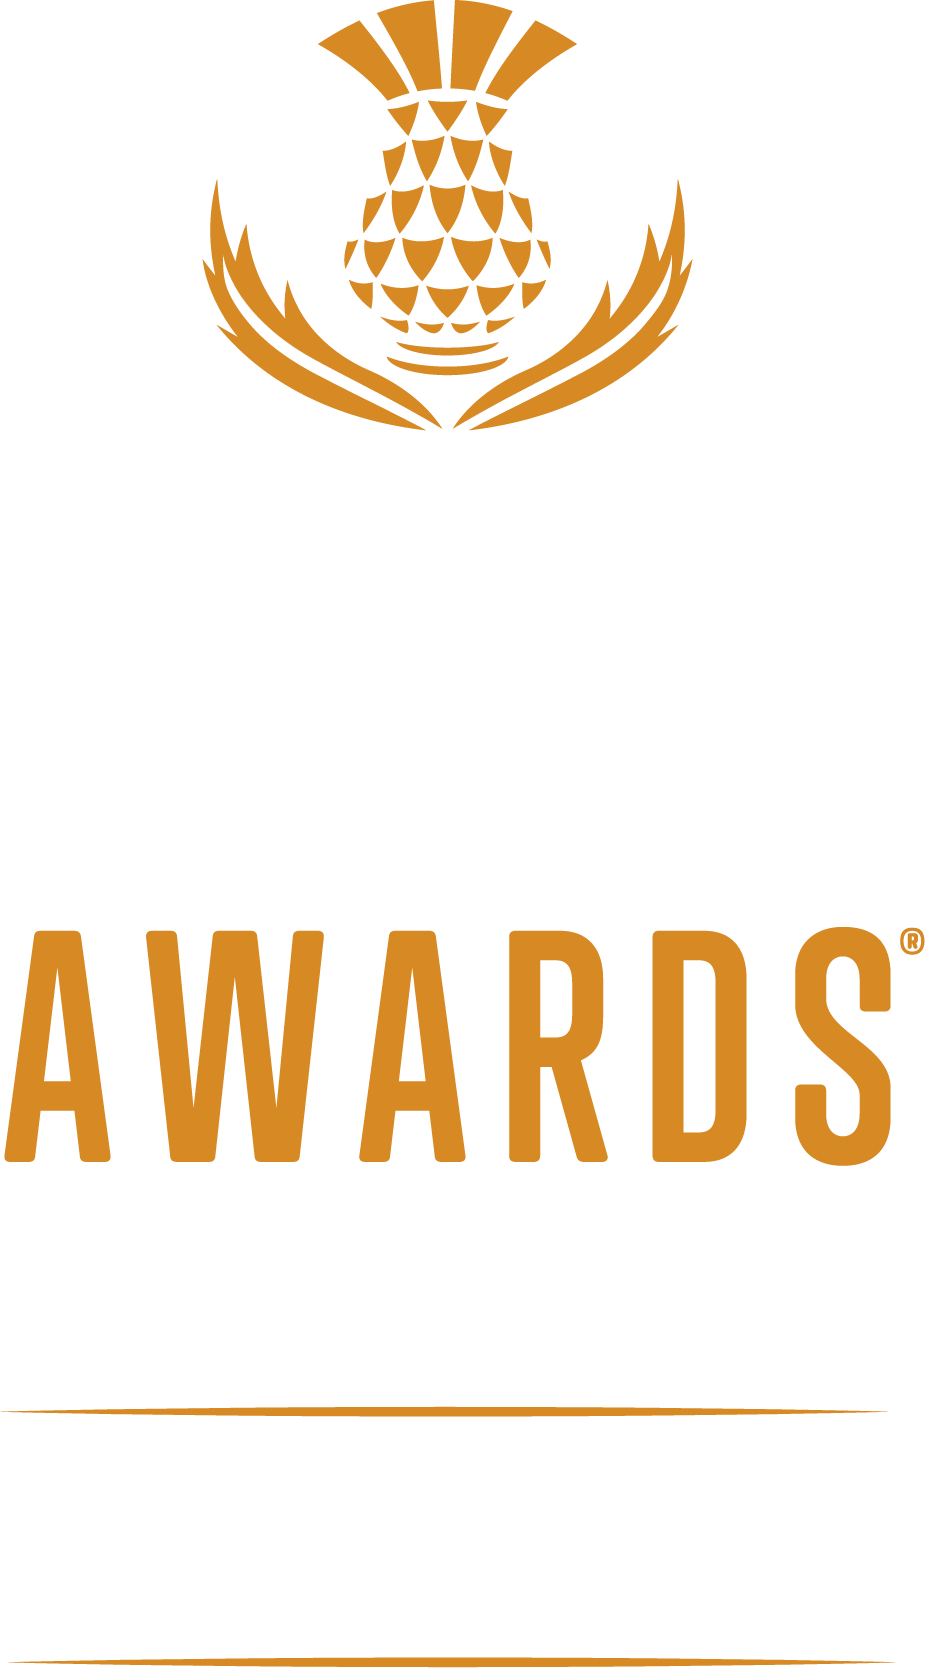 The Glasgow Distillery Company Ltd